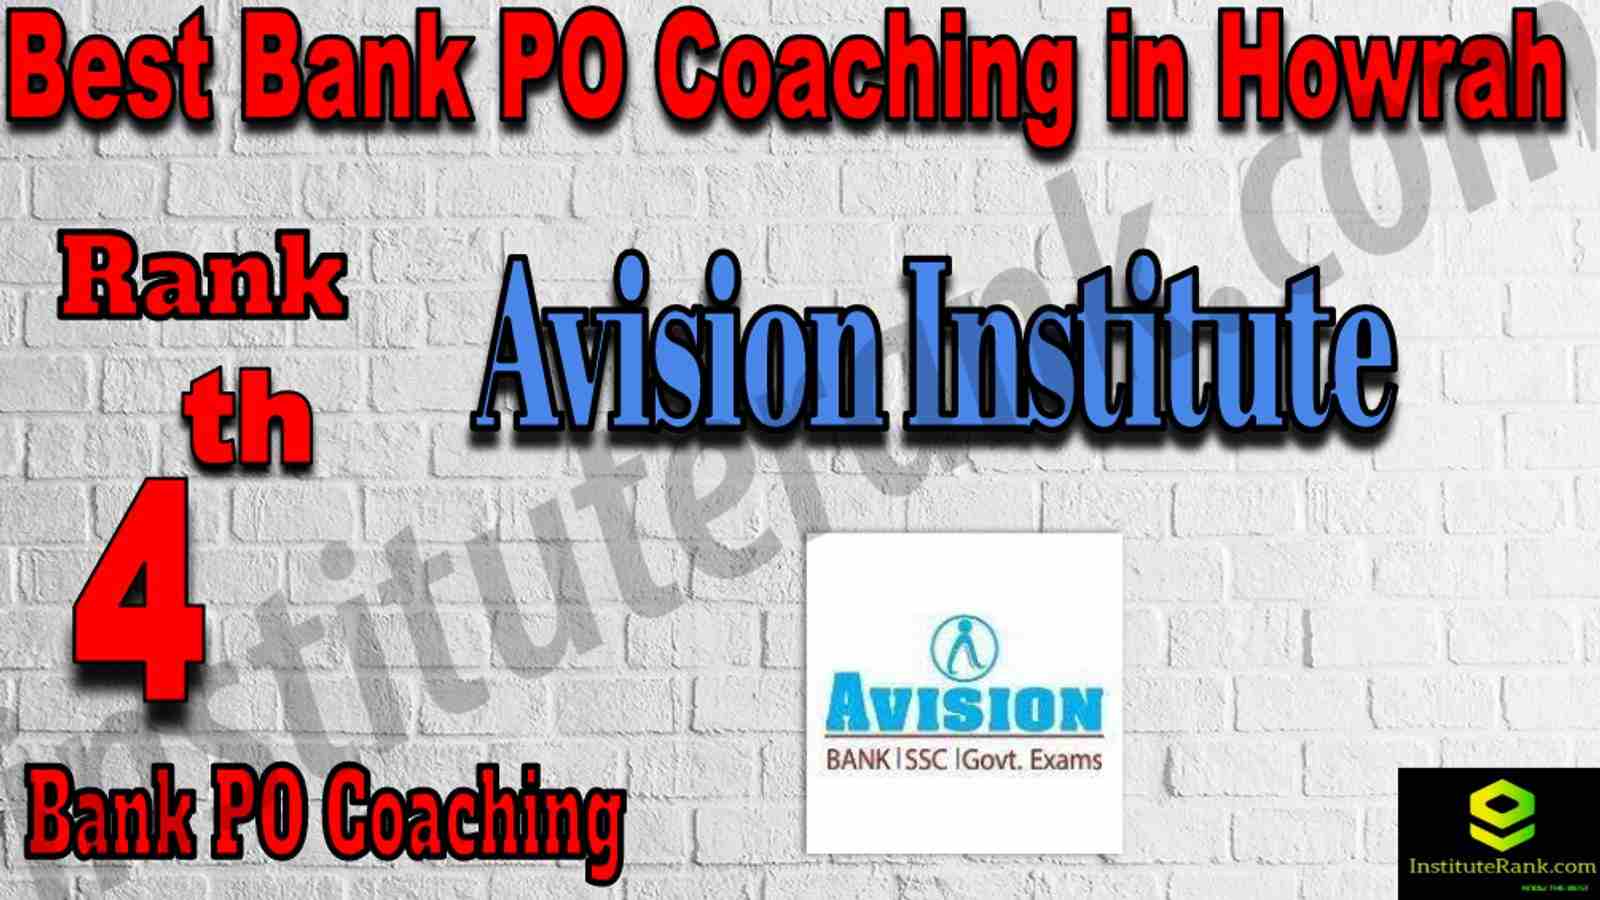 4th Best Bank PO Coaching in Howrah